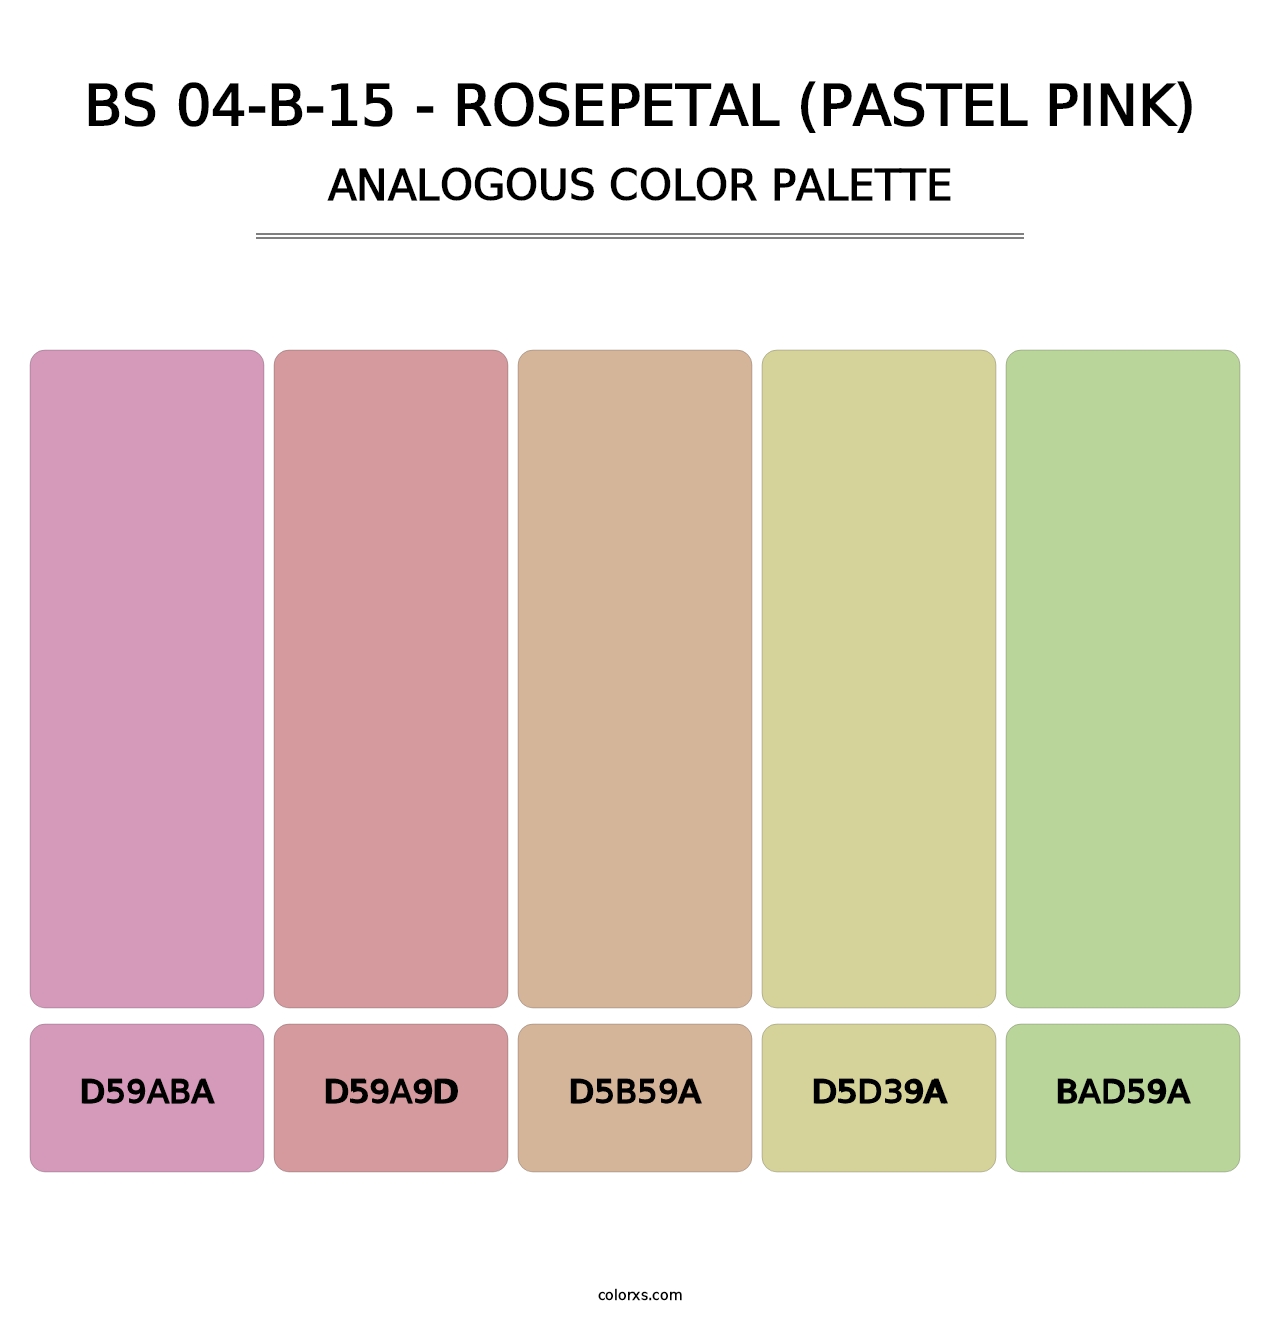 BS 04-B-15 - Rosepetal (Pastel Pink) - Analogous Color Palette